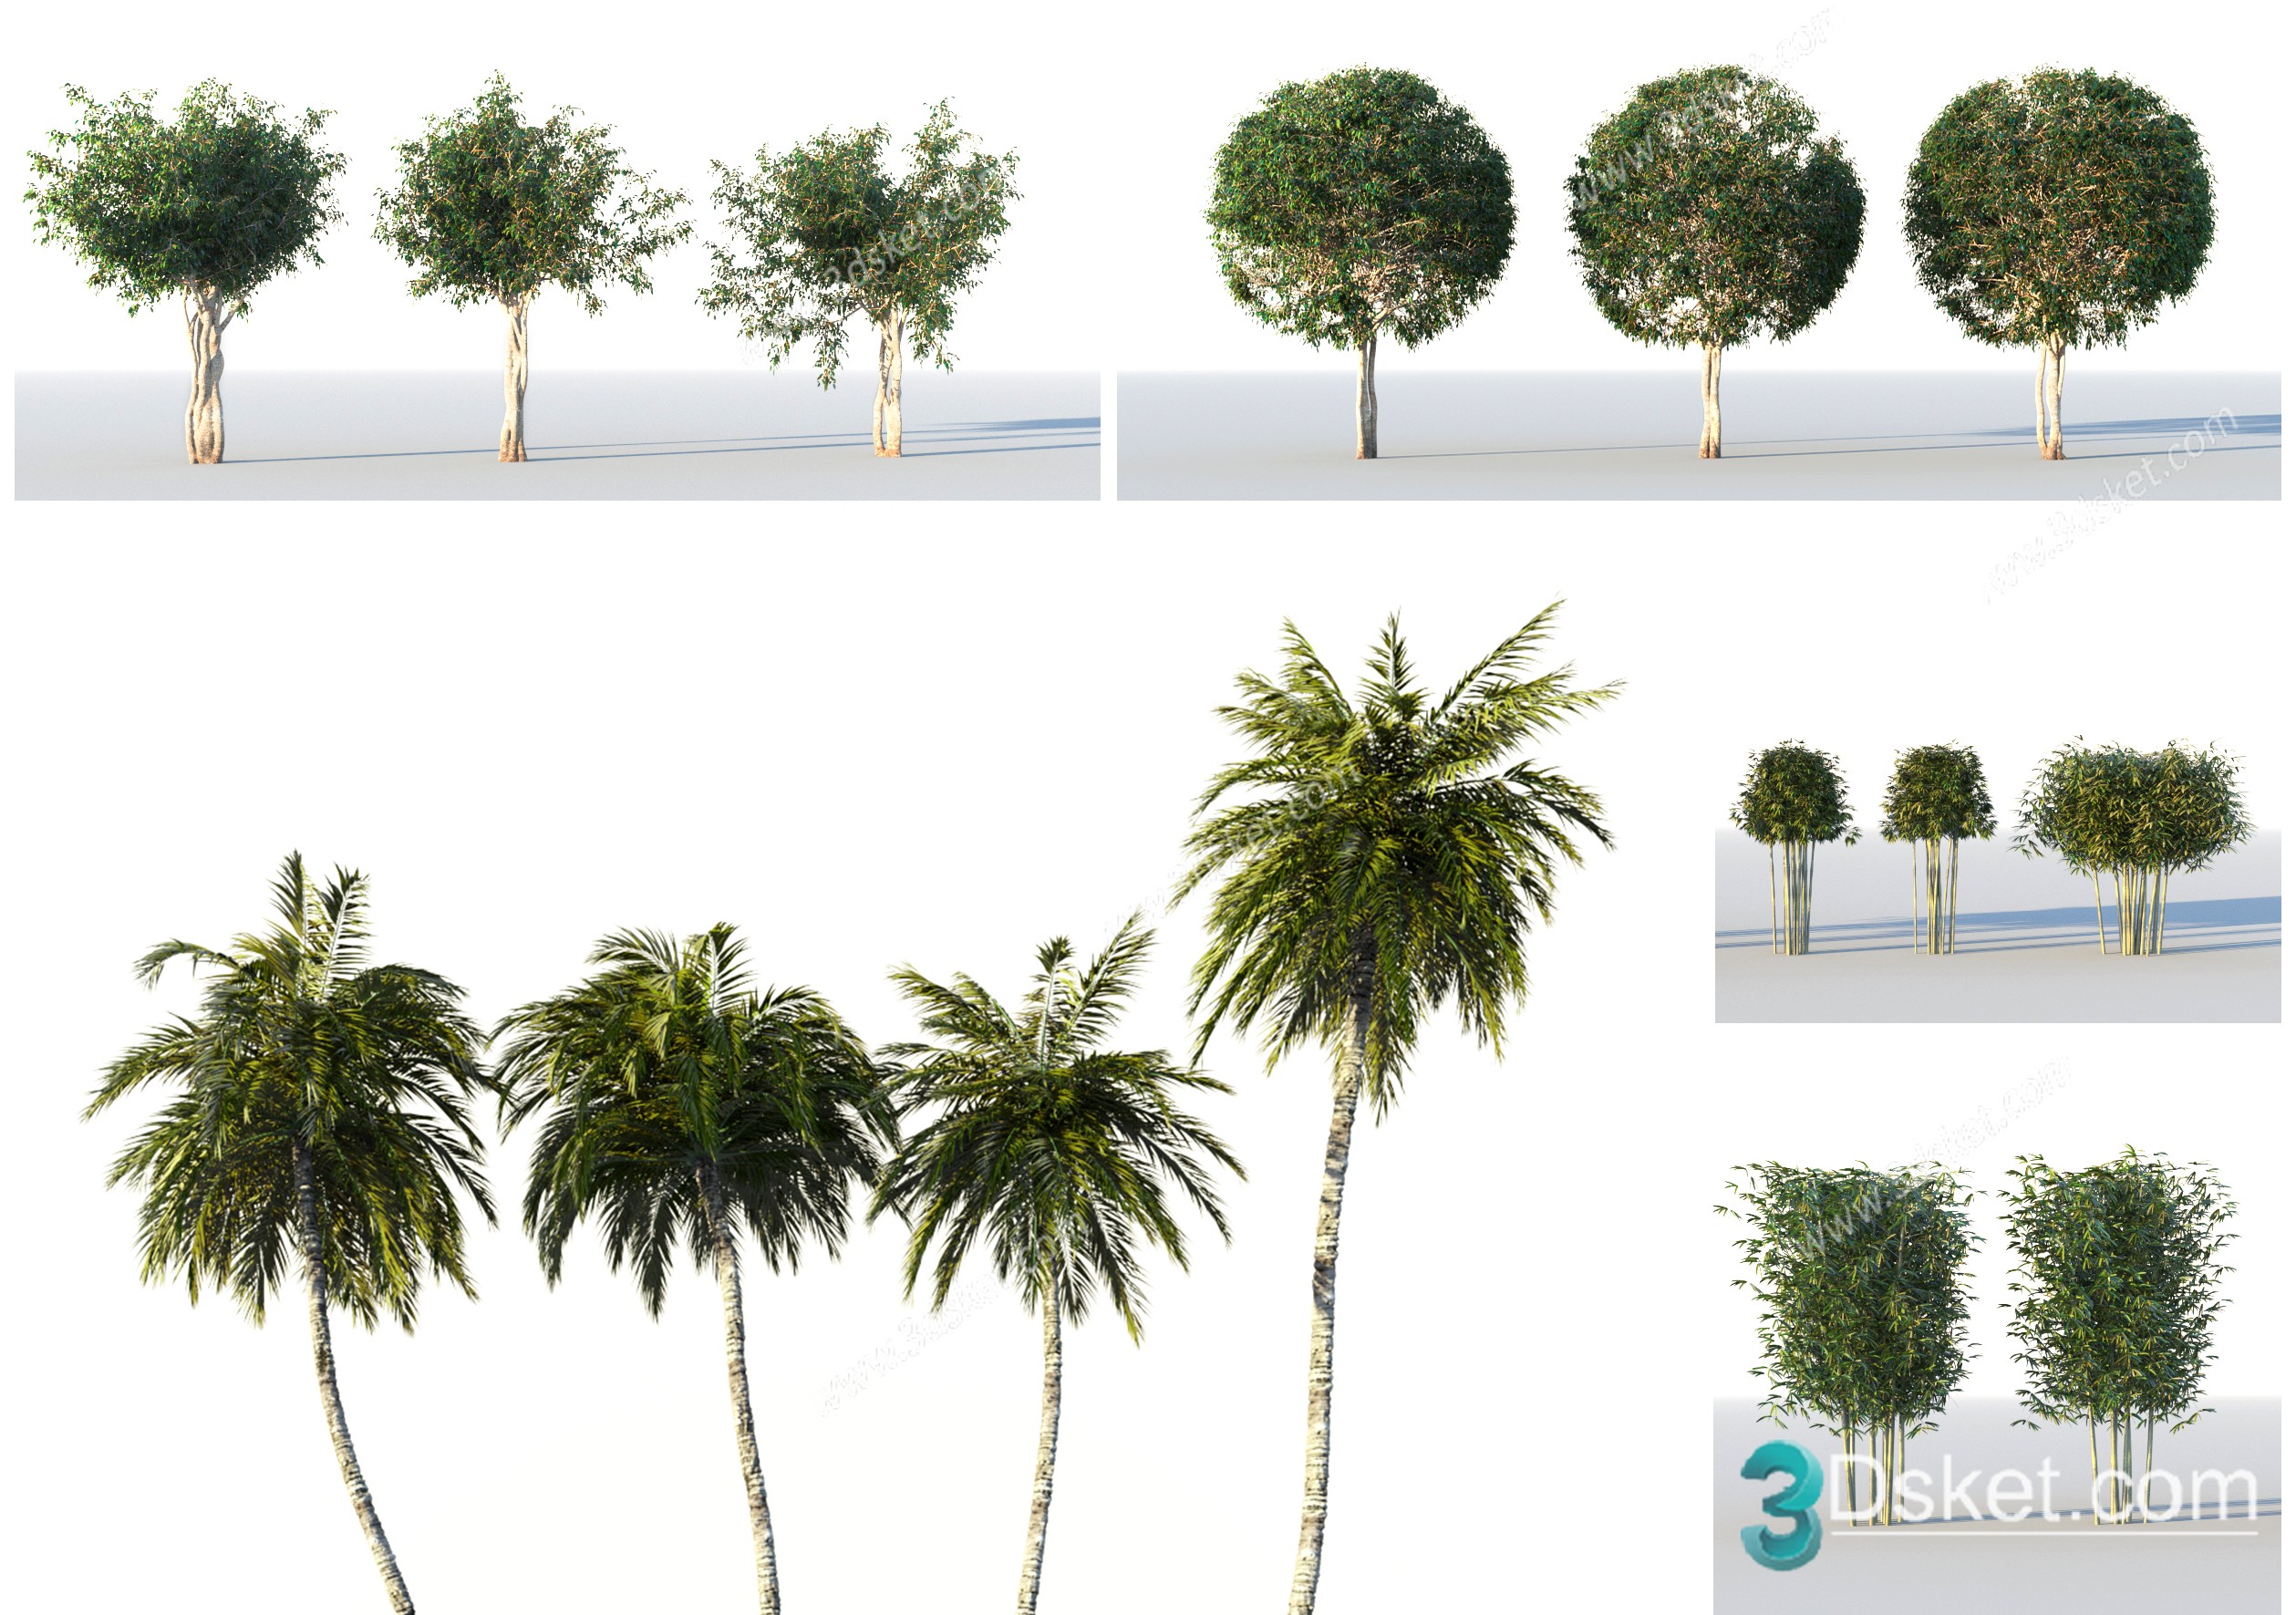 3D Model Outdoor Plants Free Download 070